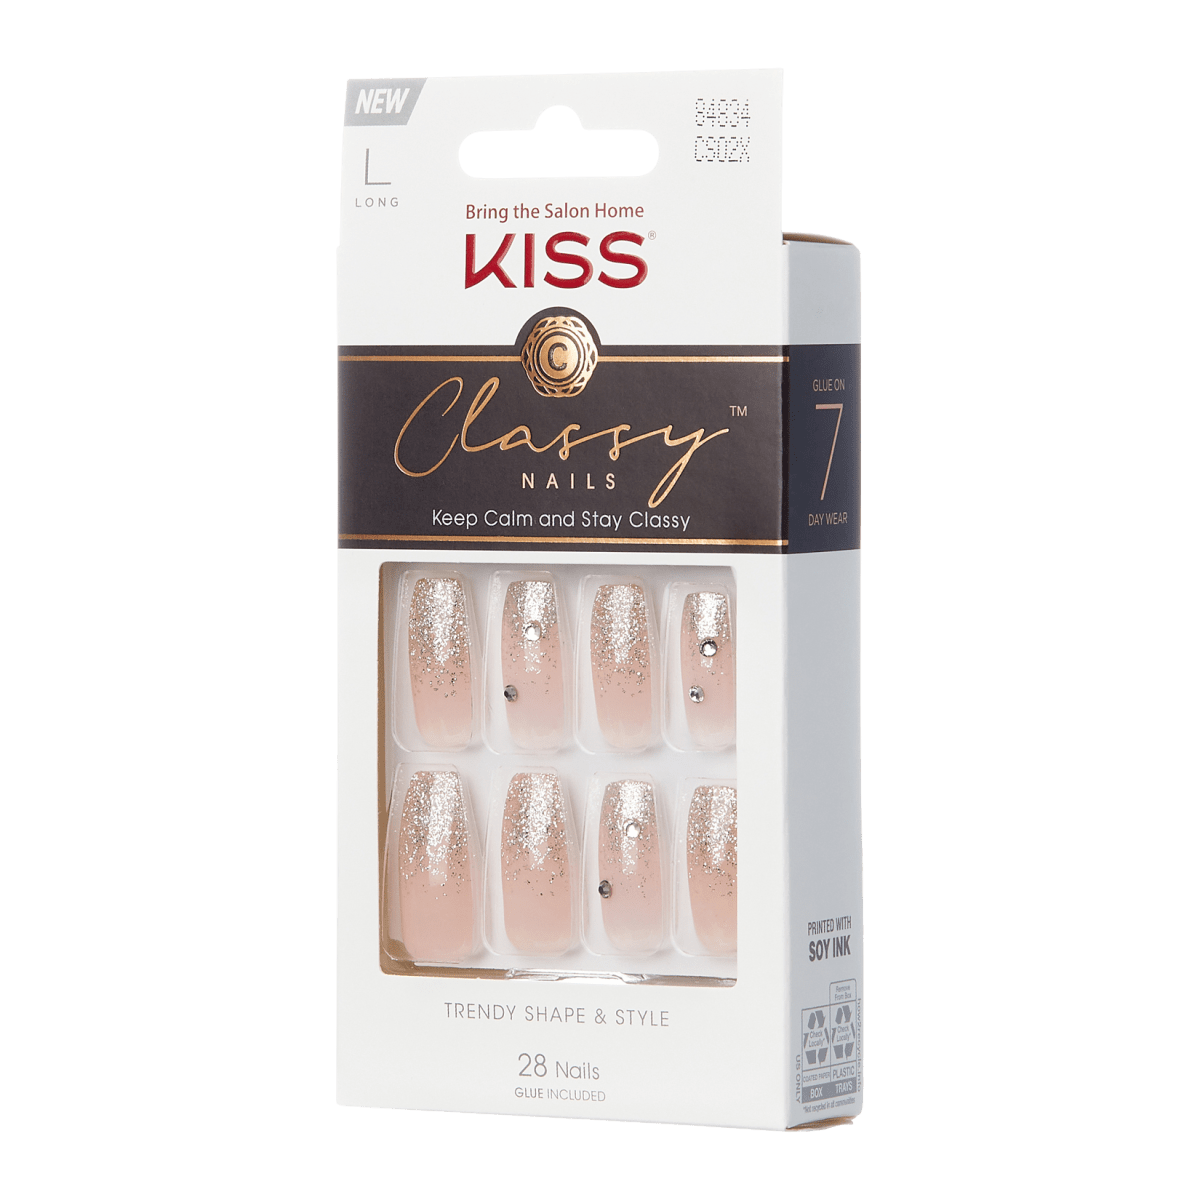 KISS Classy Nails - My View